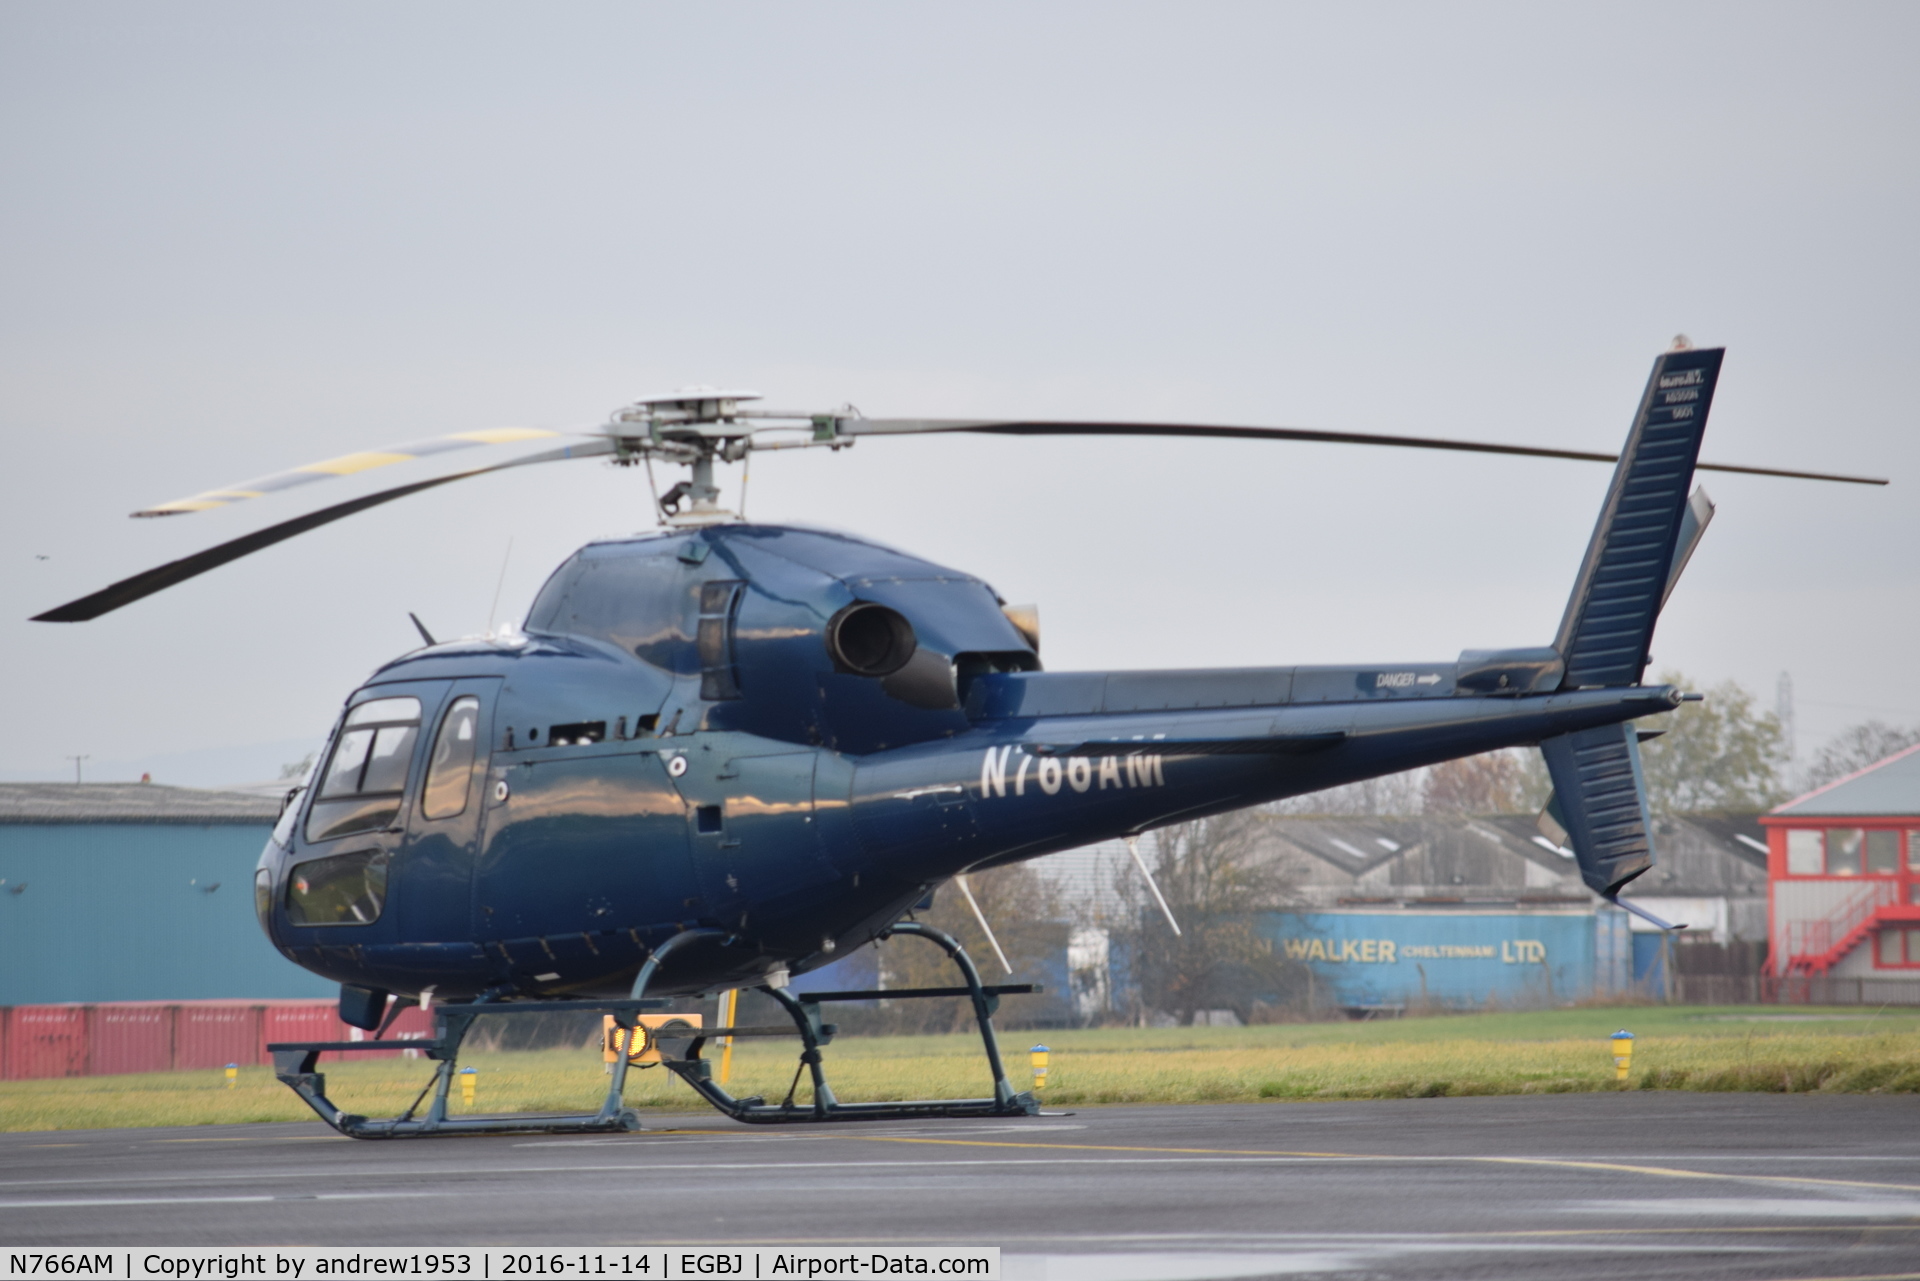 N766AM, 1996 Eurocopter AS-355N Twinstar C/N 5601, N766AM at Gloucestershire Airport.